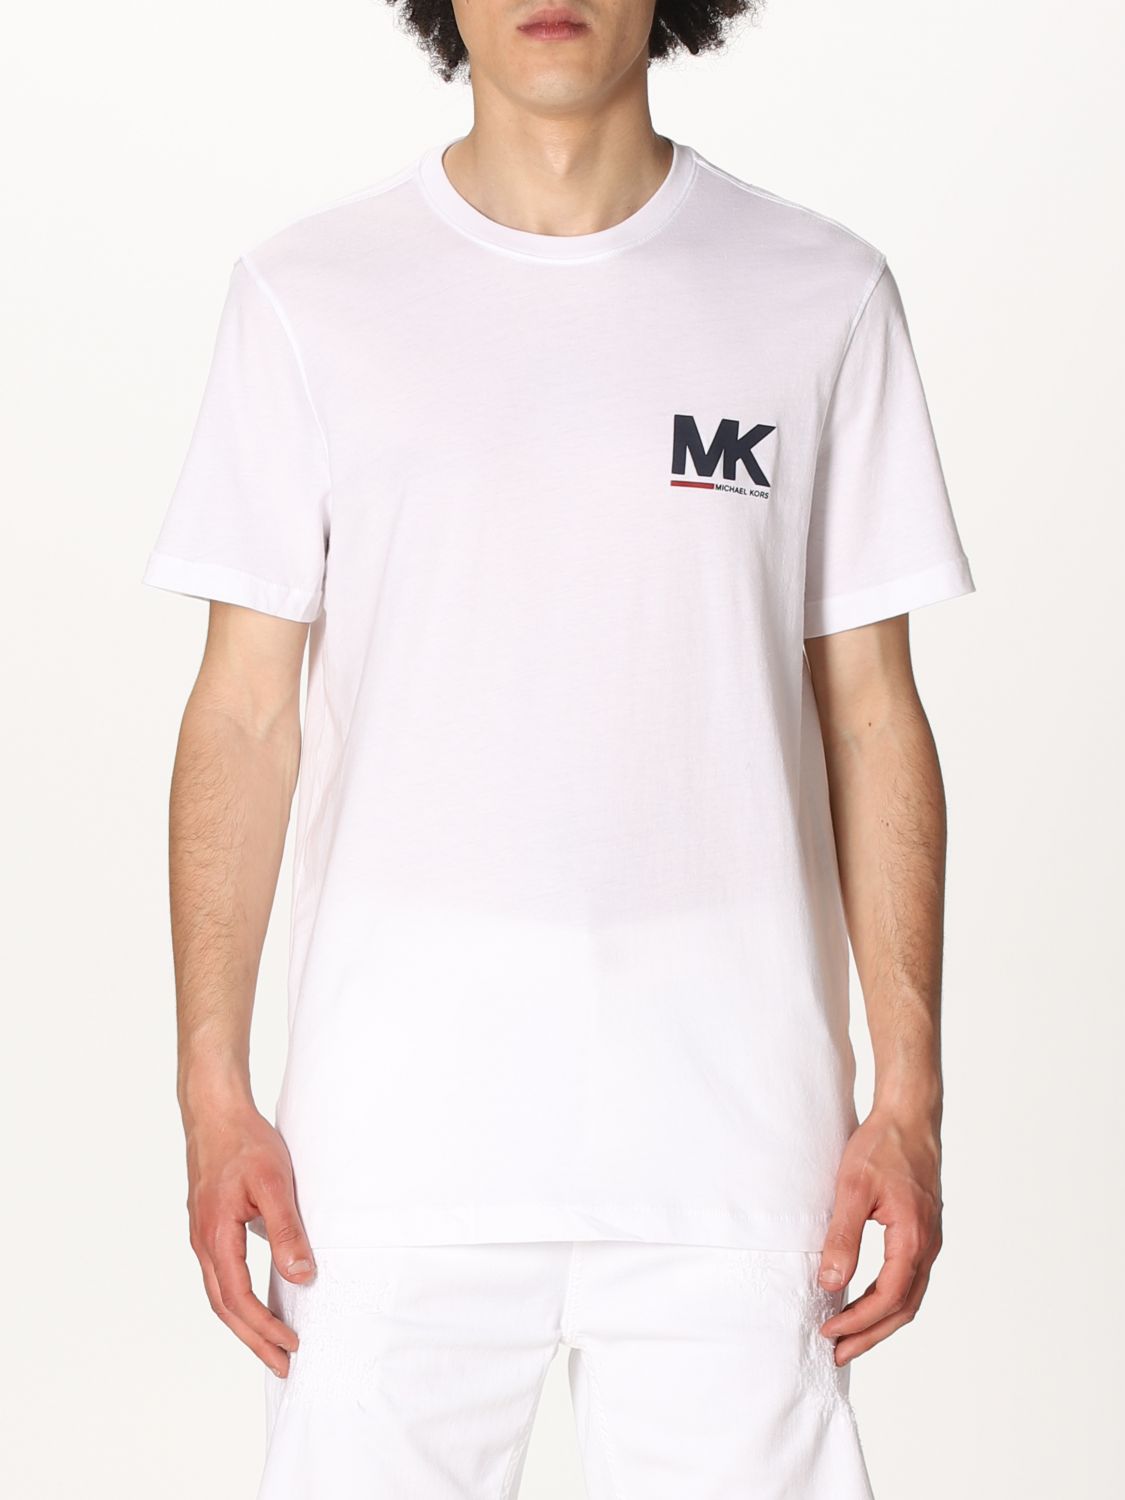 Buy Black Tshirts for Men by Michael Kors Online  Ajiocom